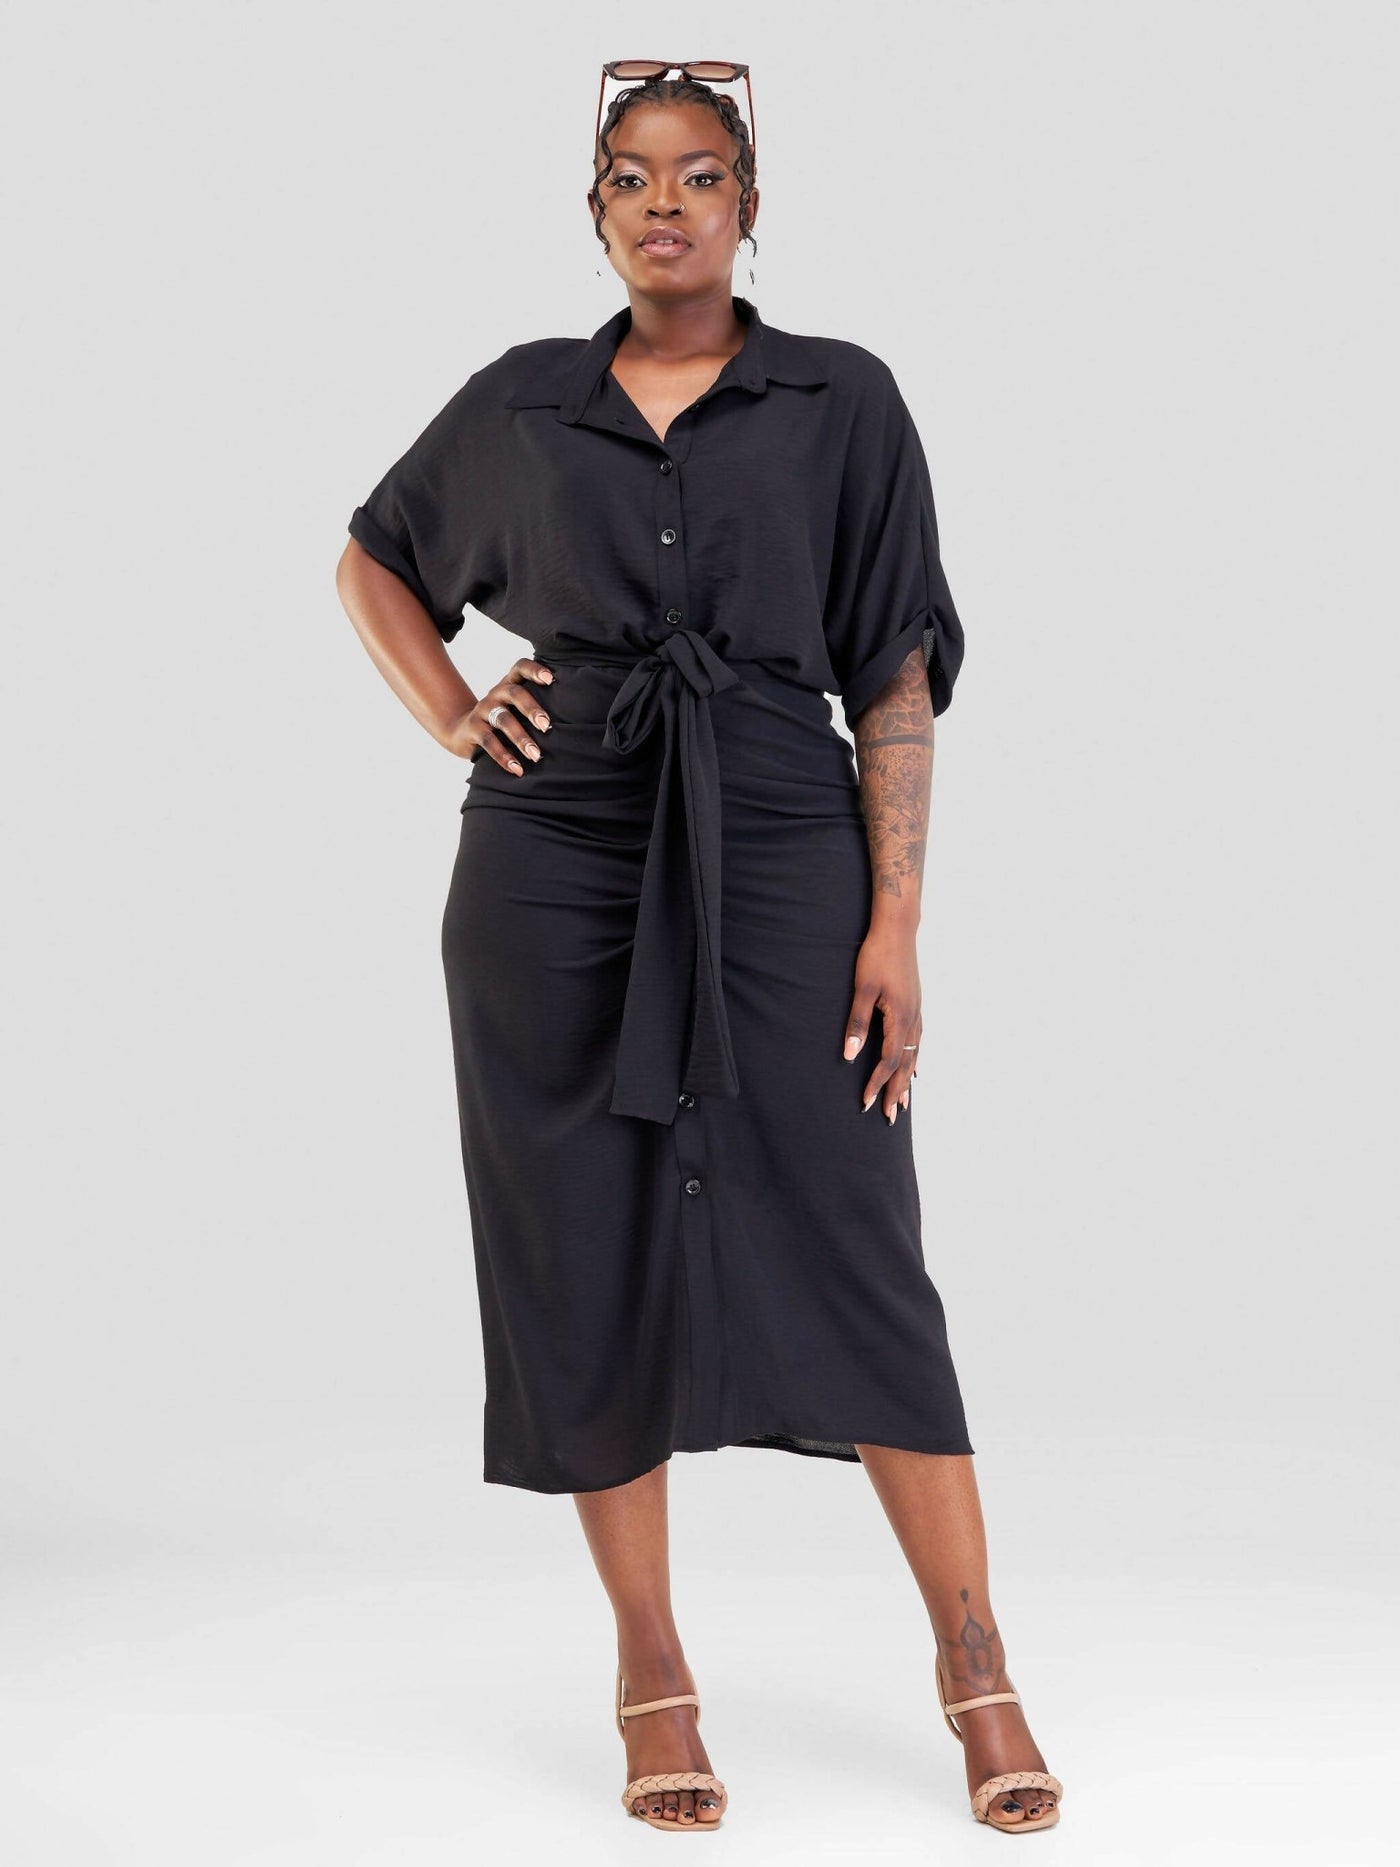 Lizola Amber Ruched Dress - Black - Shopzetu